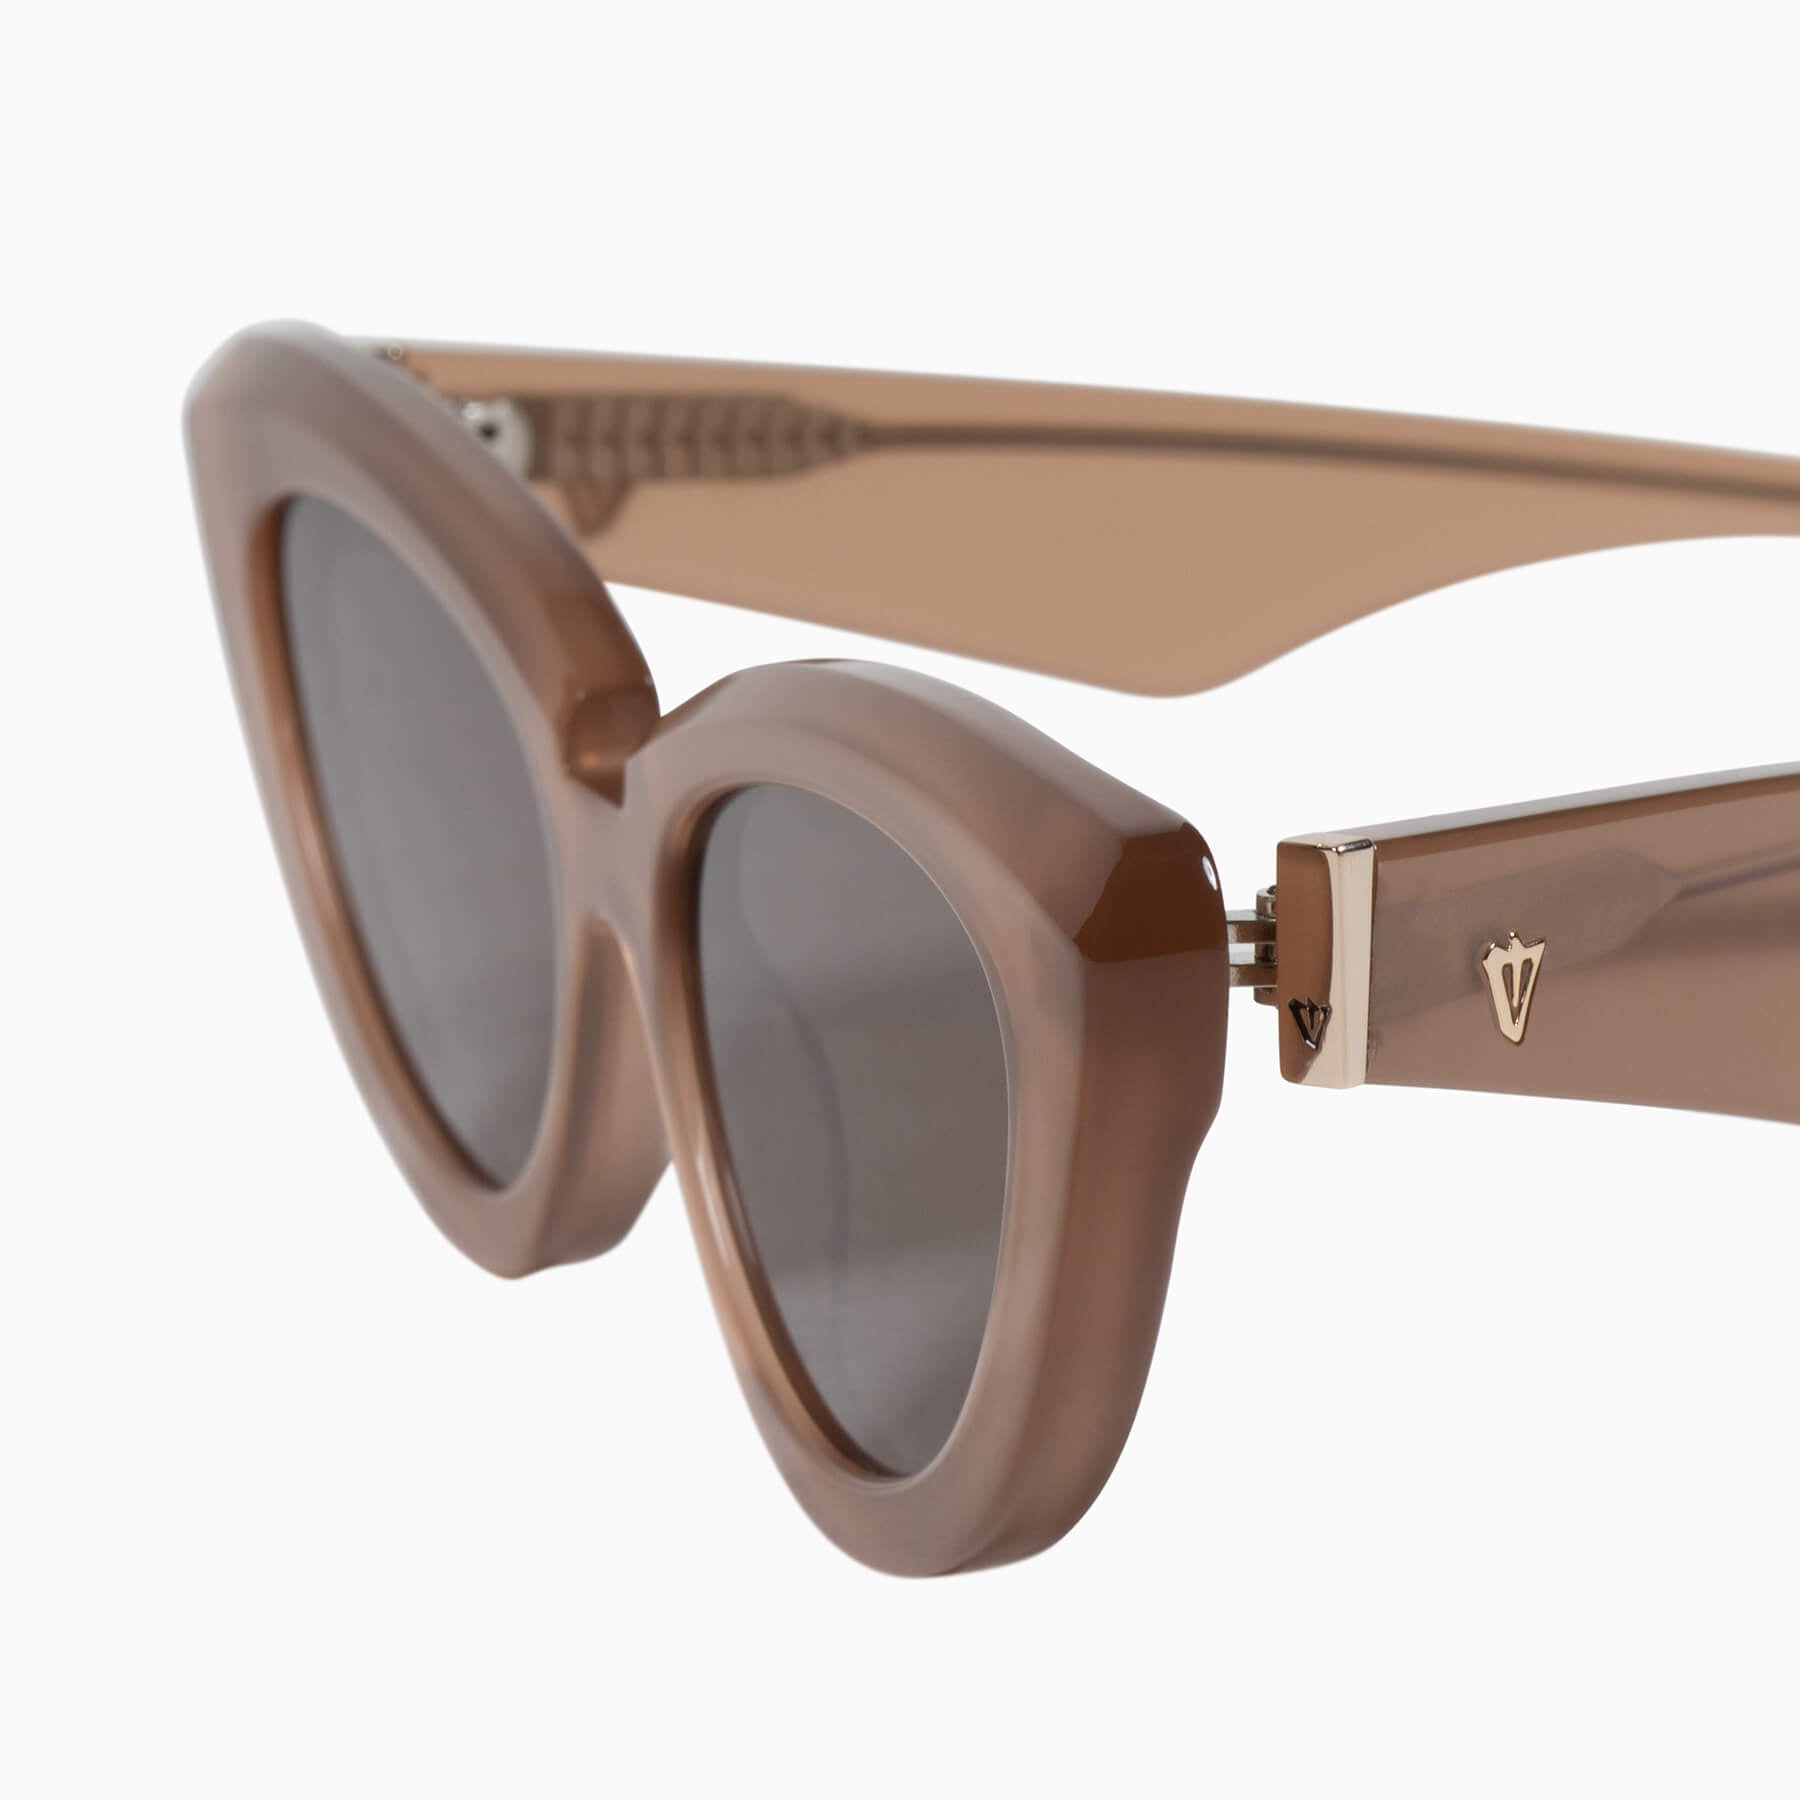 Valley Eyewear | Dayze | Sunglasses - Chestnut w. Gold Metal Trim / Brown Lens